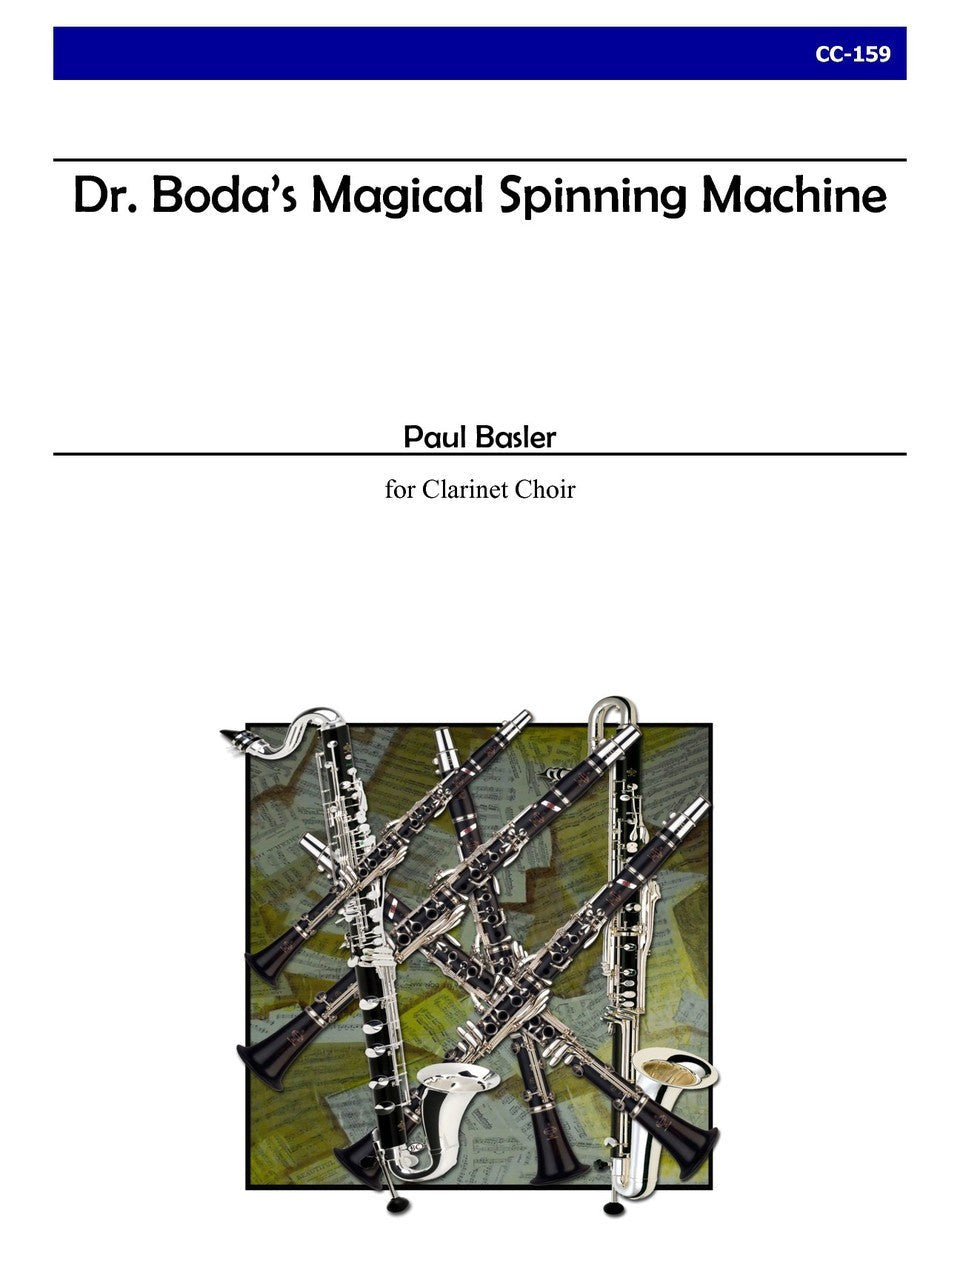 Basler - Dr. Boda's Magical Spinning Machine for Clarinet Choir